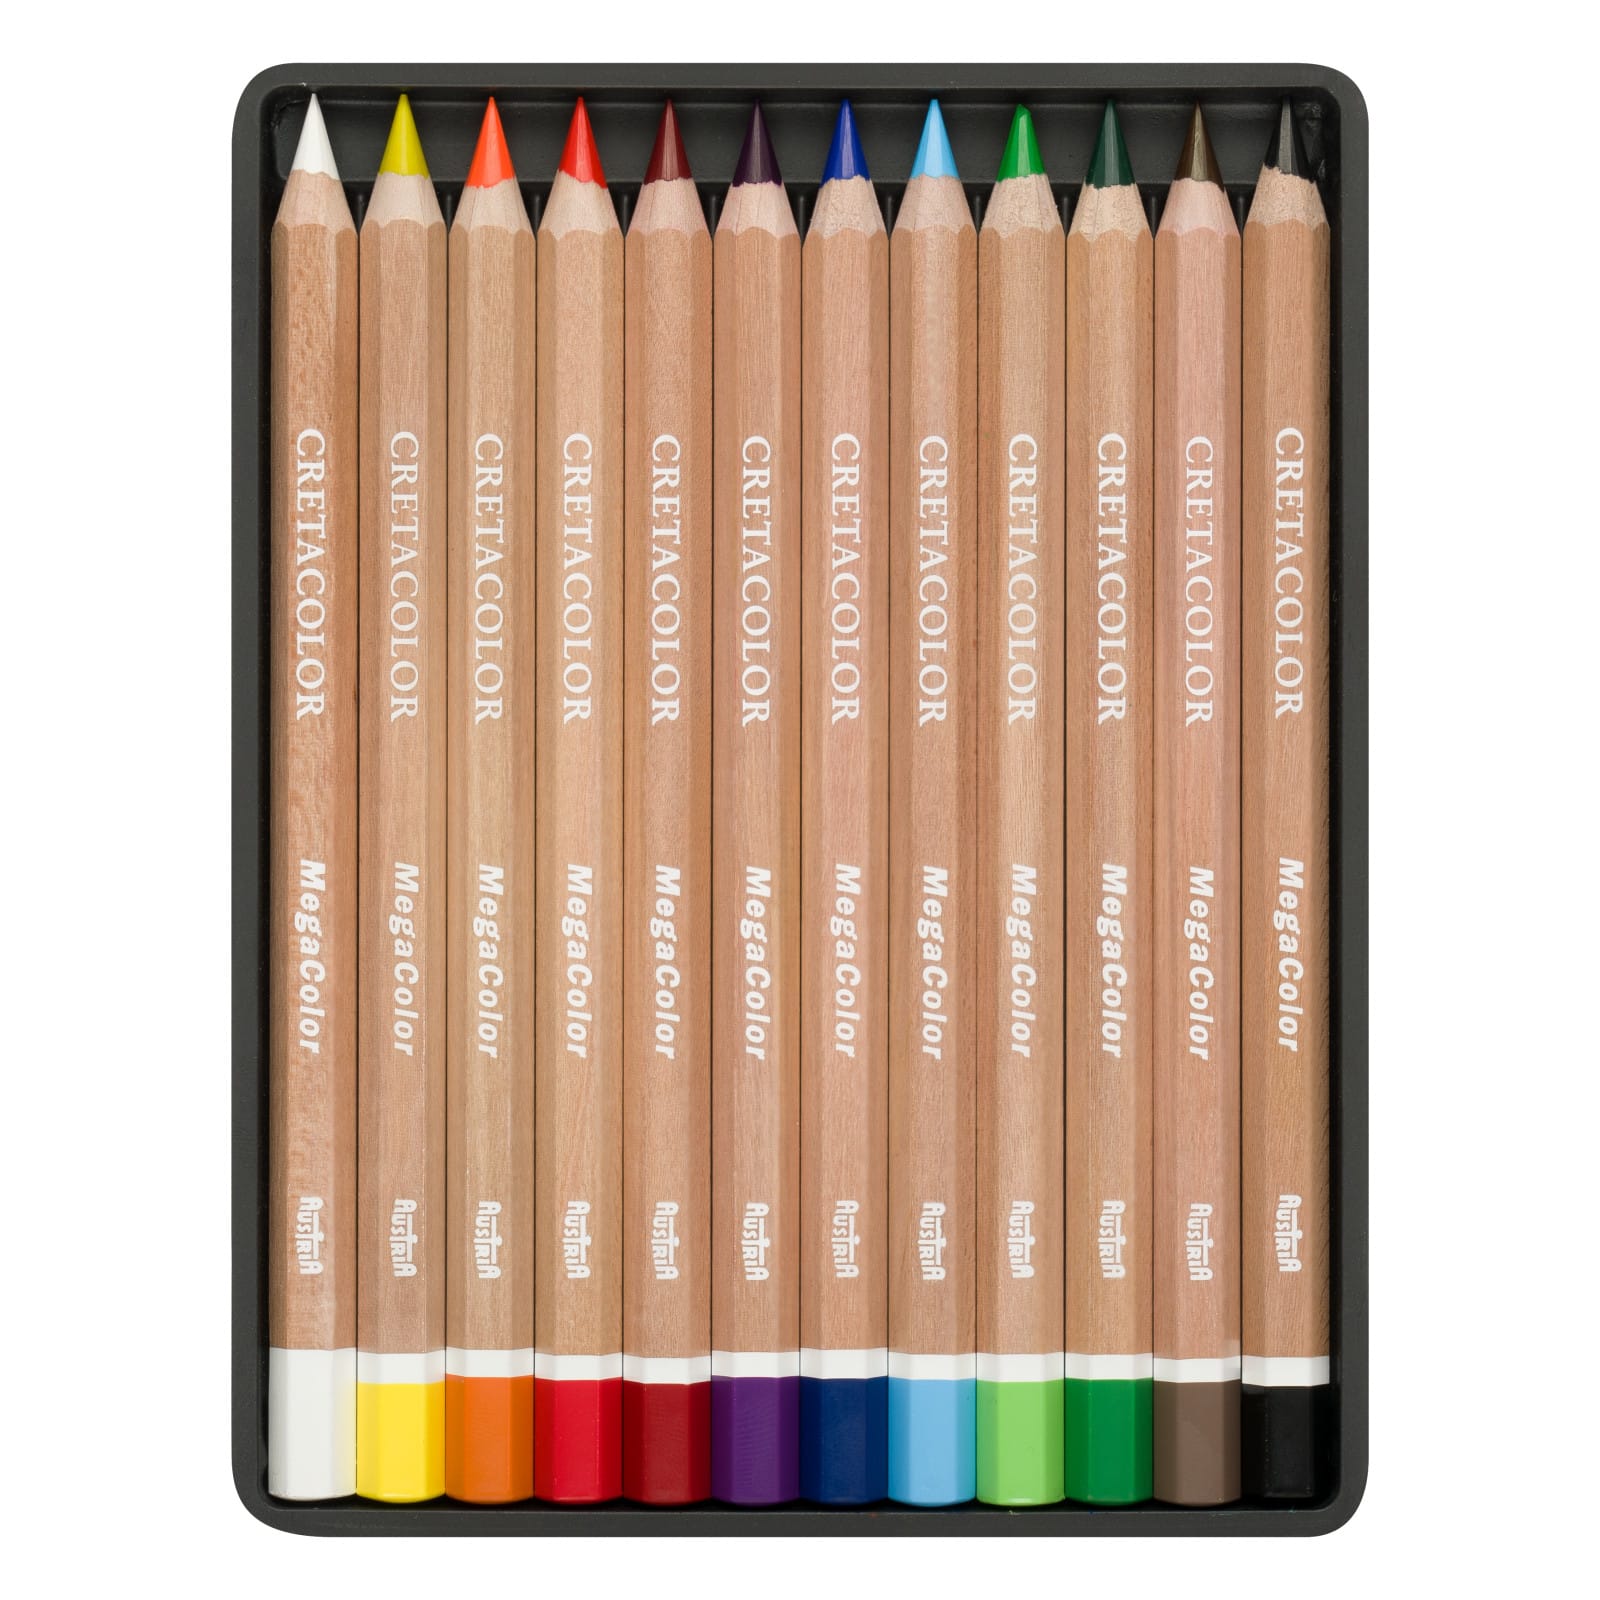 3 Packs: 12 ct. (36 total) Cretacolor MegaColor Colored Pencils